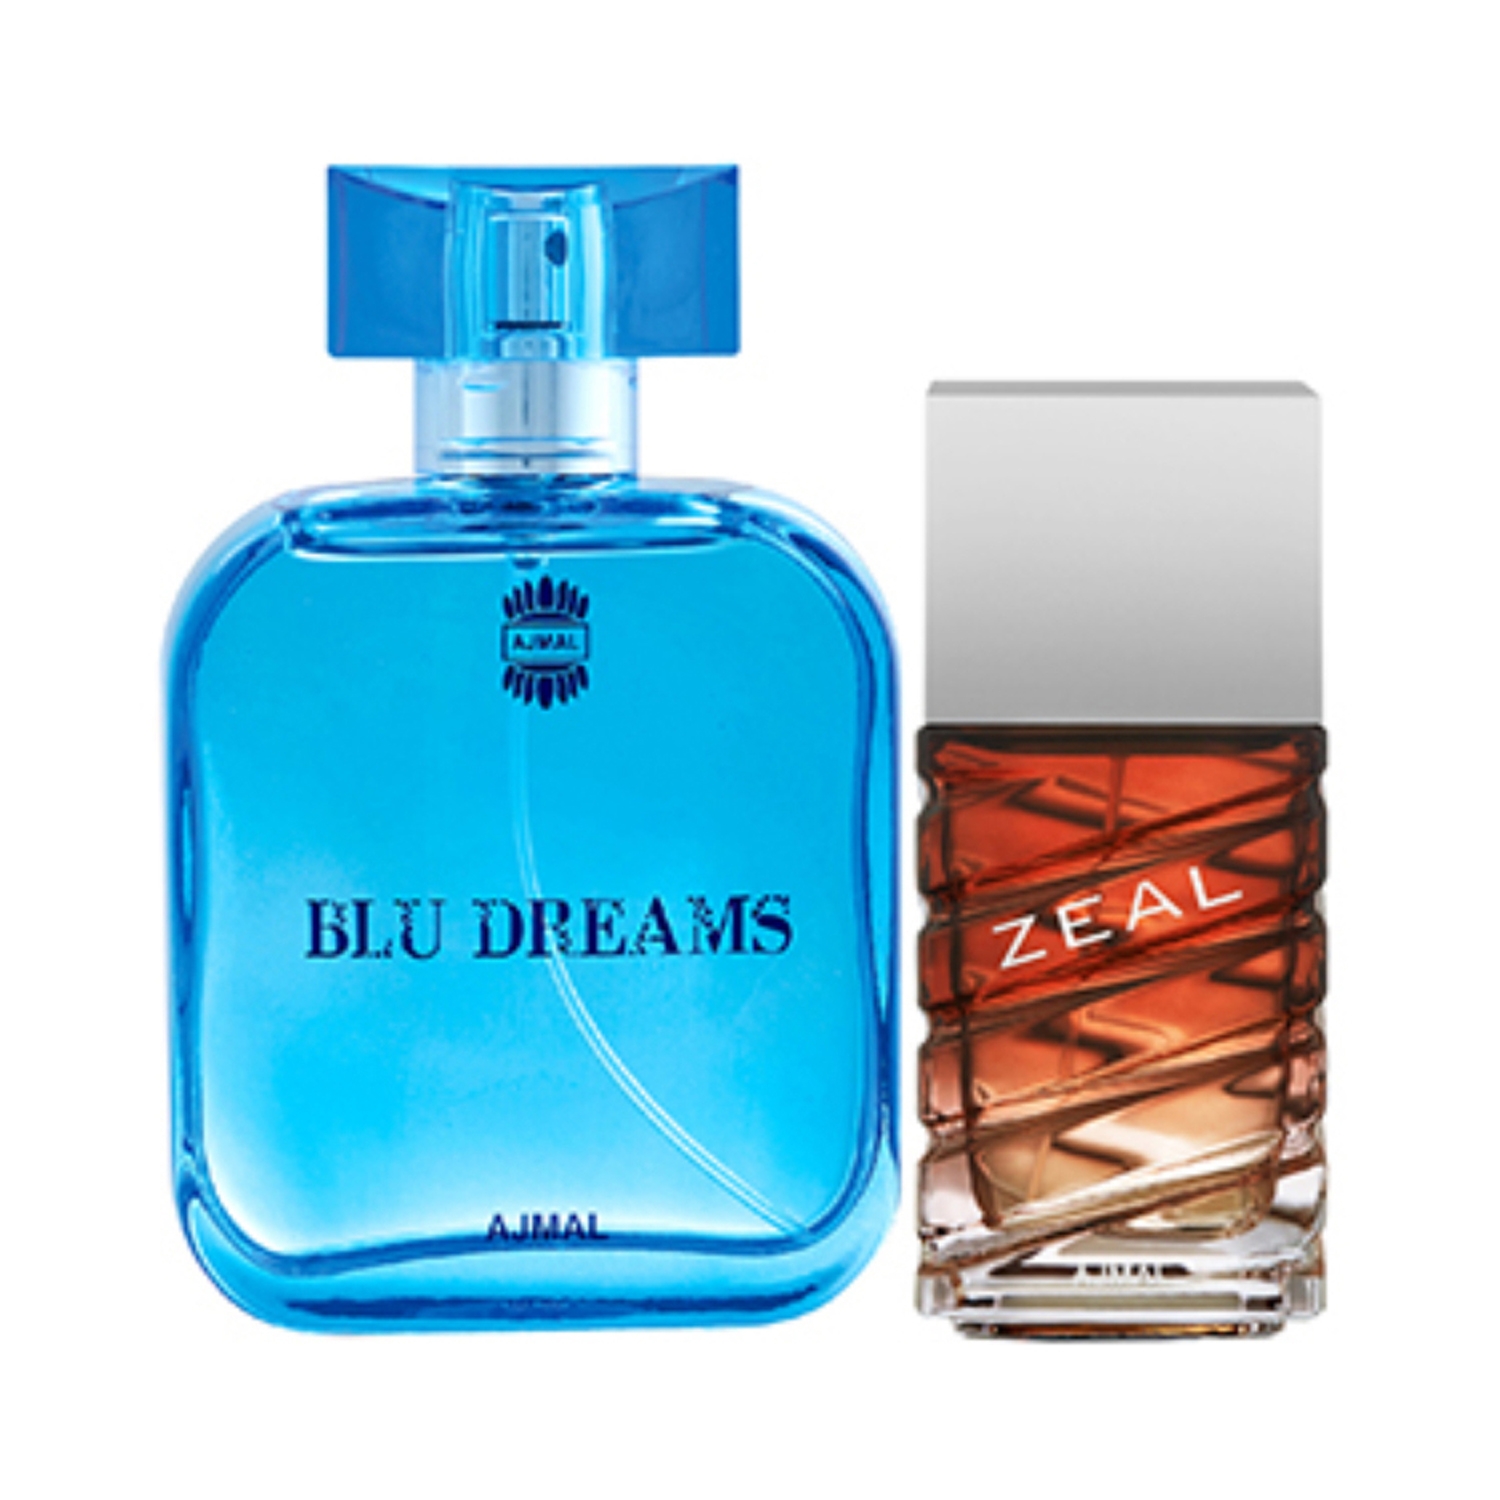 Ajmal Blu Dreams Eau De Parfum Citurs Fruity Perfume And Zeal Eau De Parfum Aquatic Woody Perfume - (2Pcs)